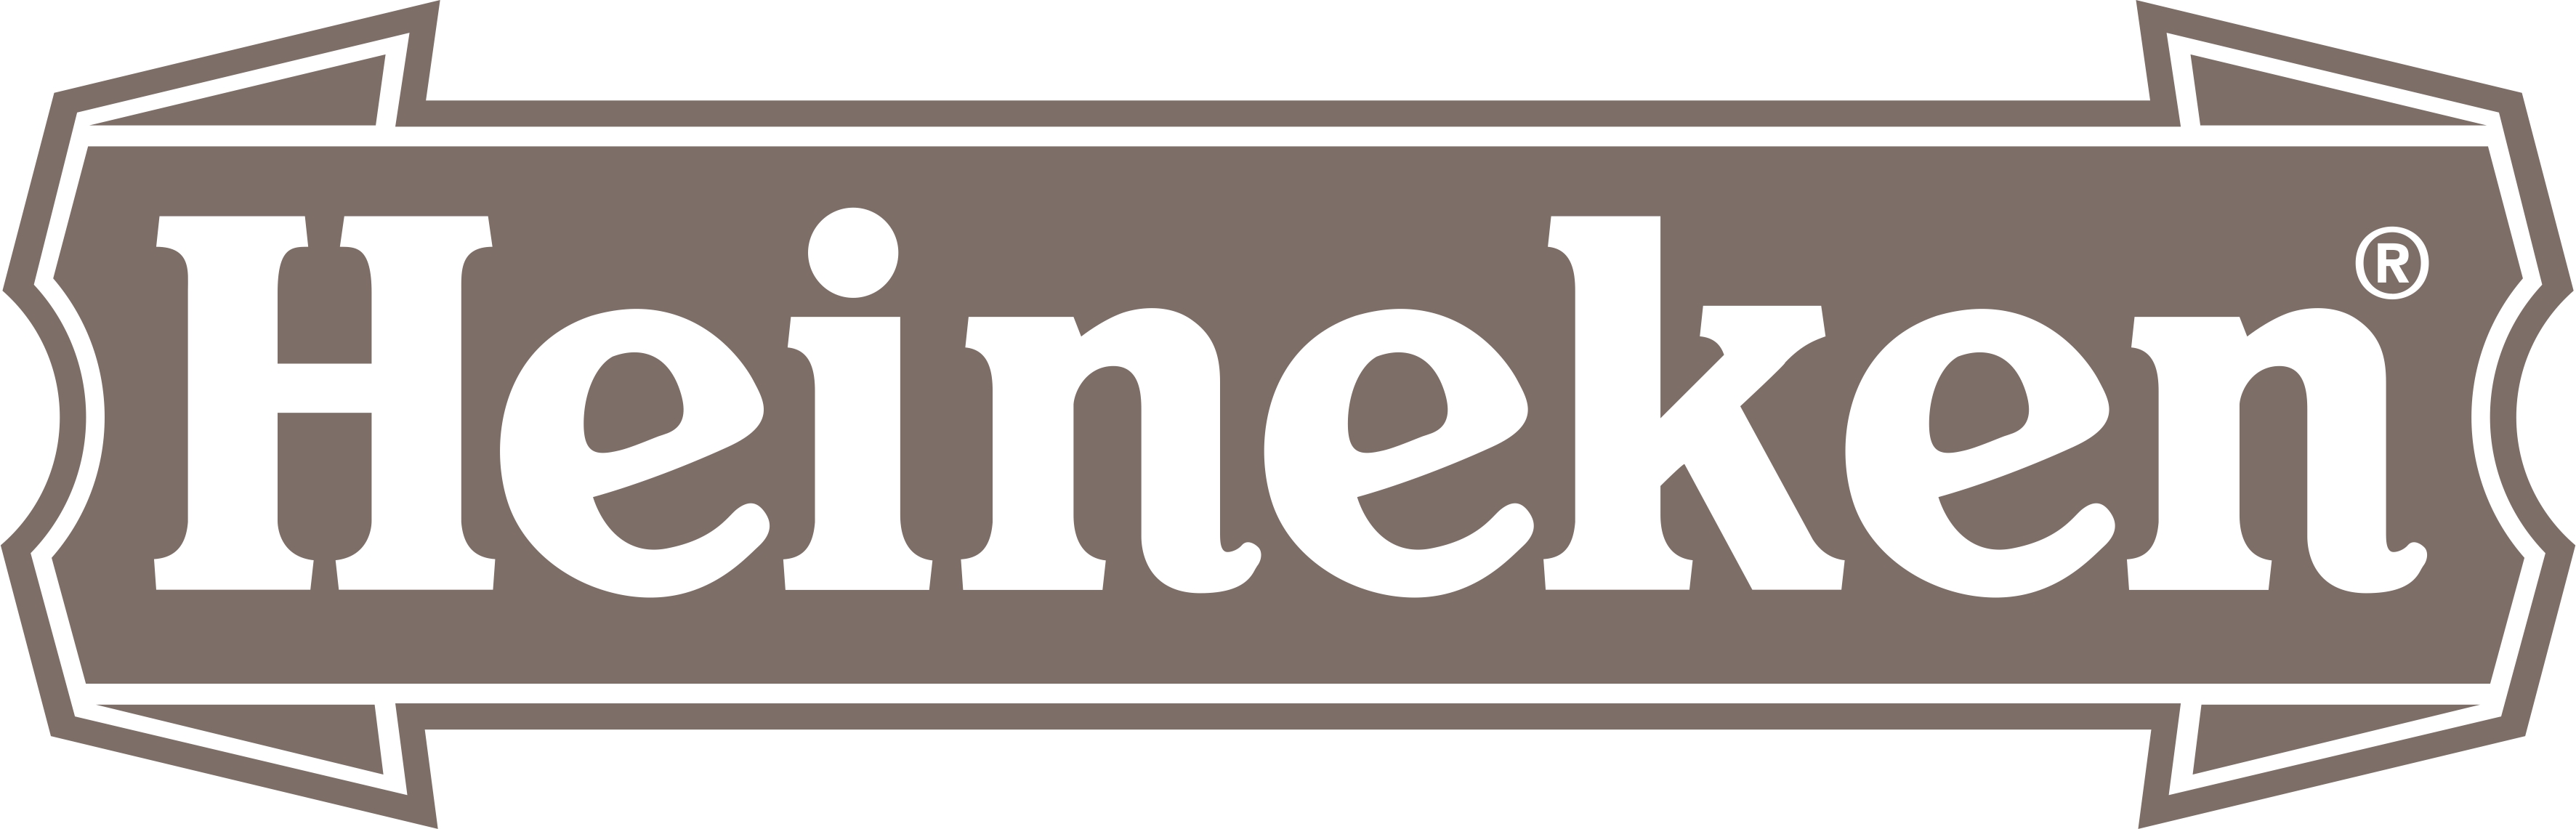 Logomarca Heineken